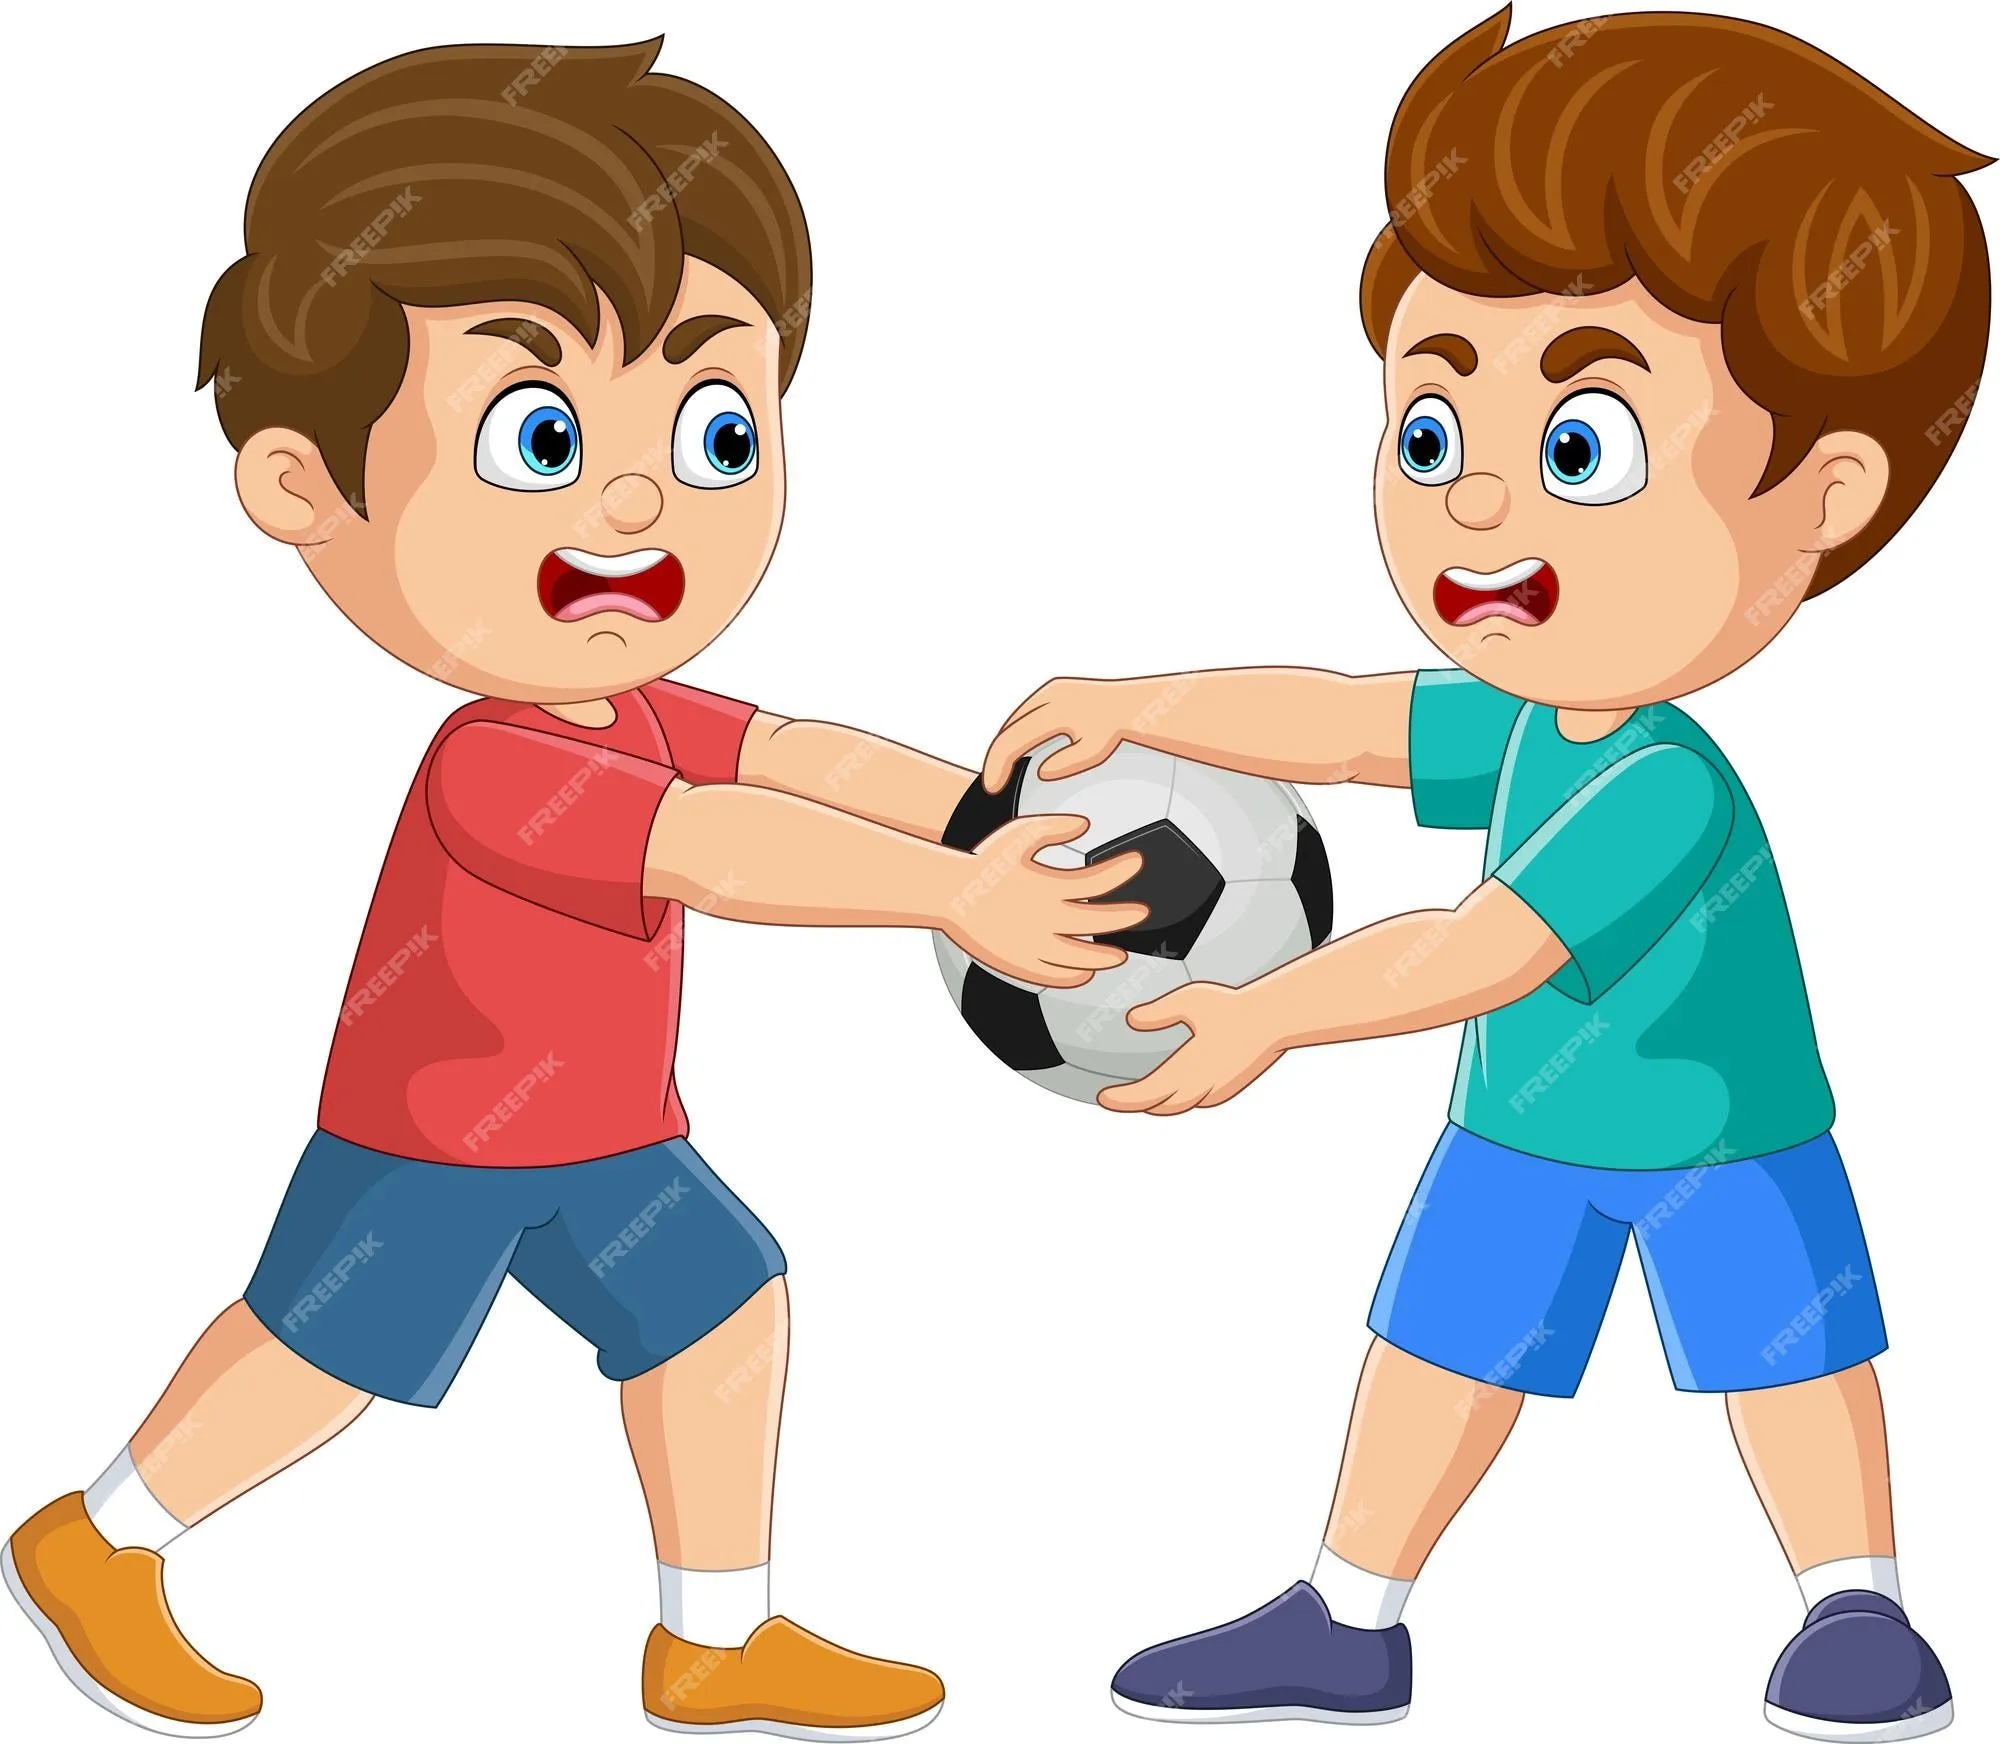 Dibujos animados de dos niños peleando por un balón de fútbol | Vector  Premium